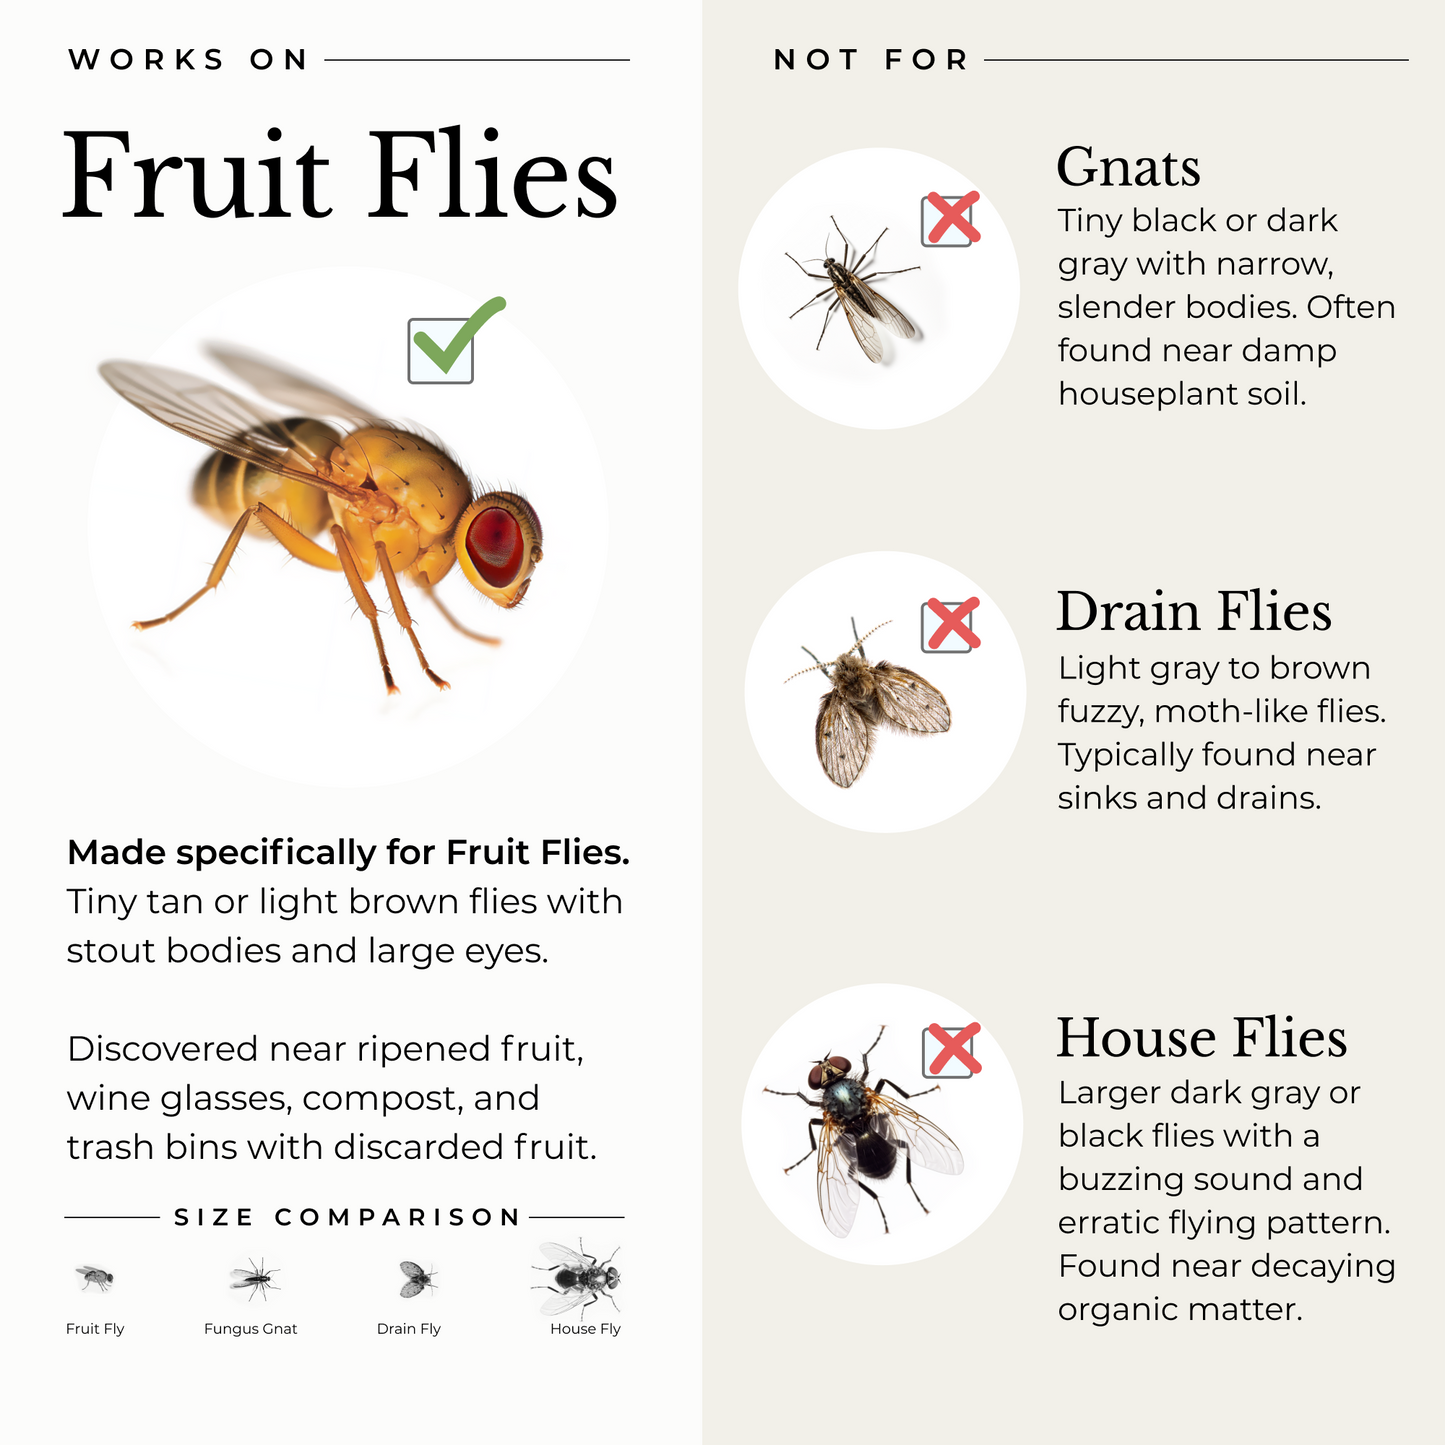 Wondercide Fruit Fly Trap Home Kitchen